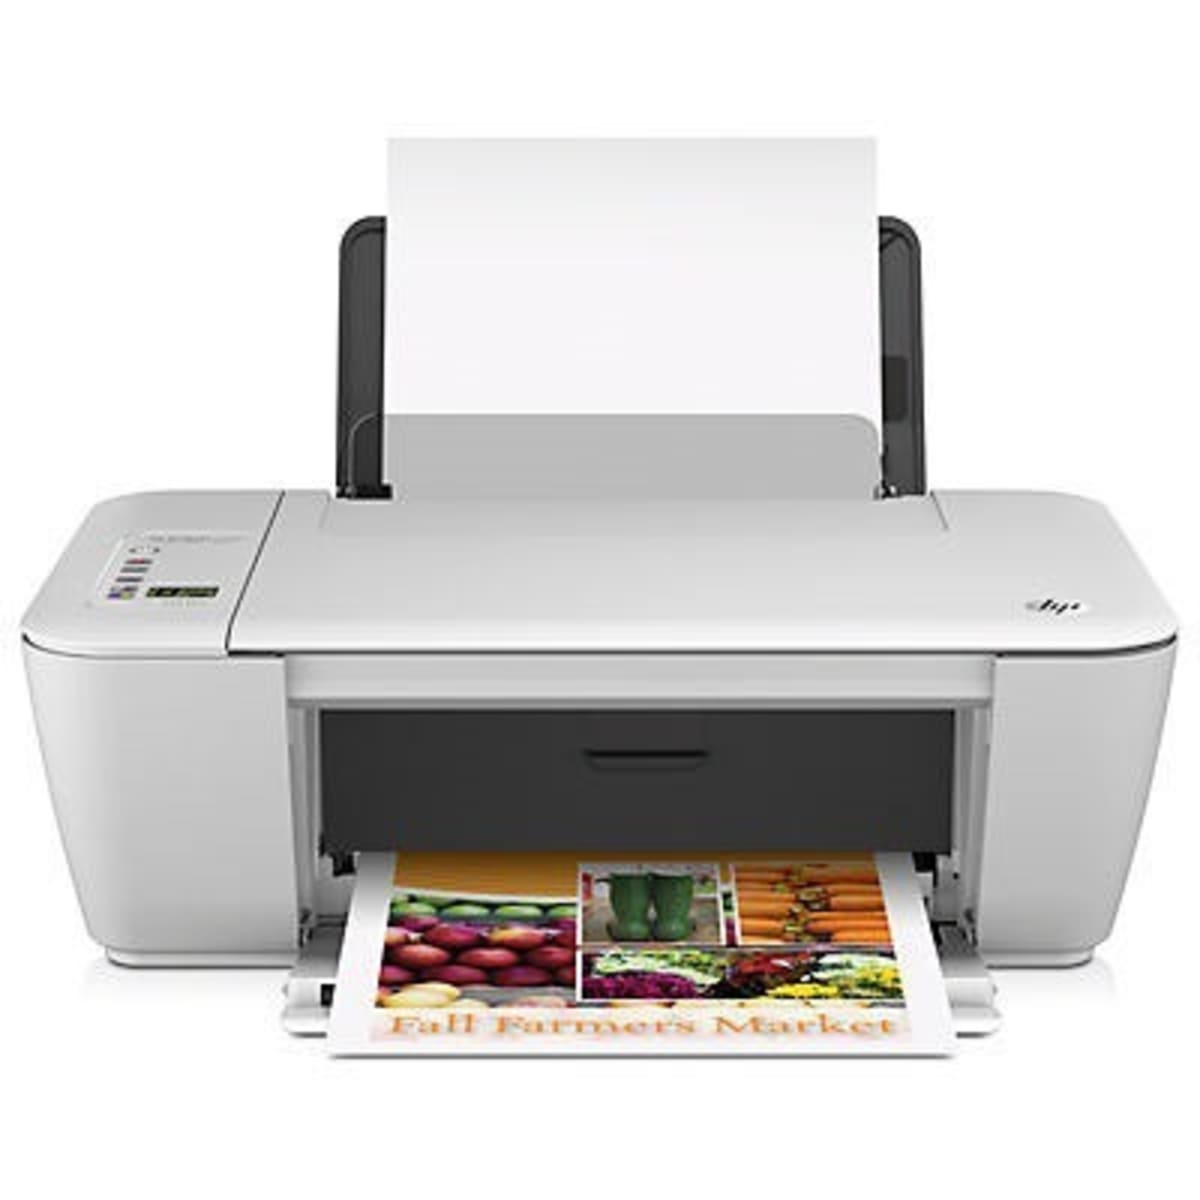 HP DeskJet 2620 All in One Wireless Printer